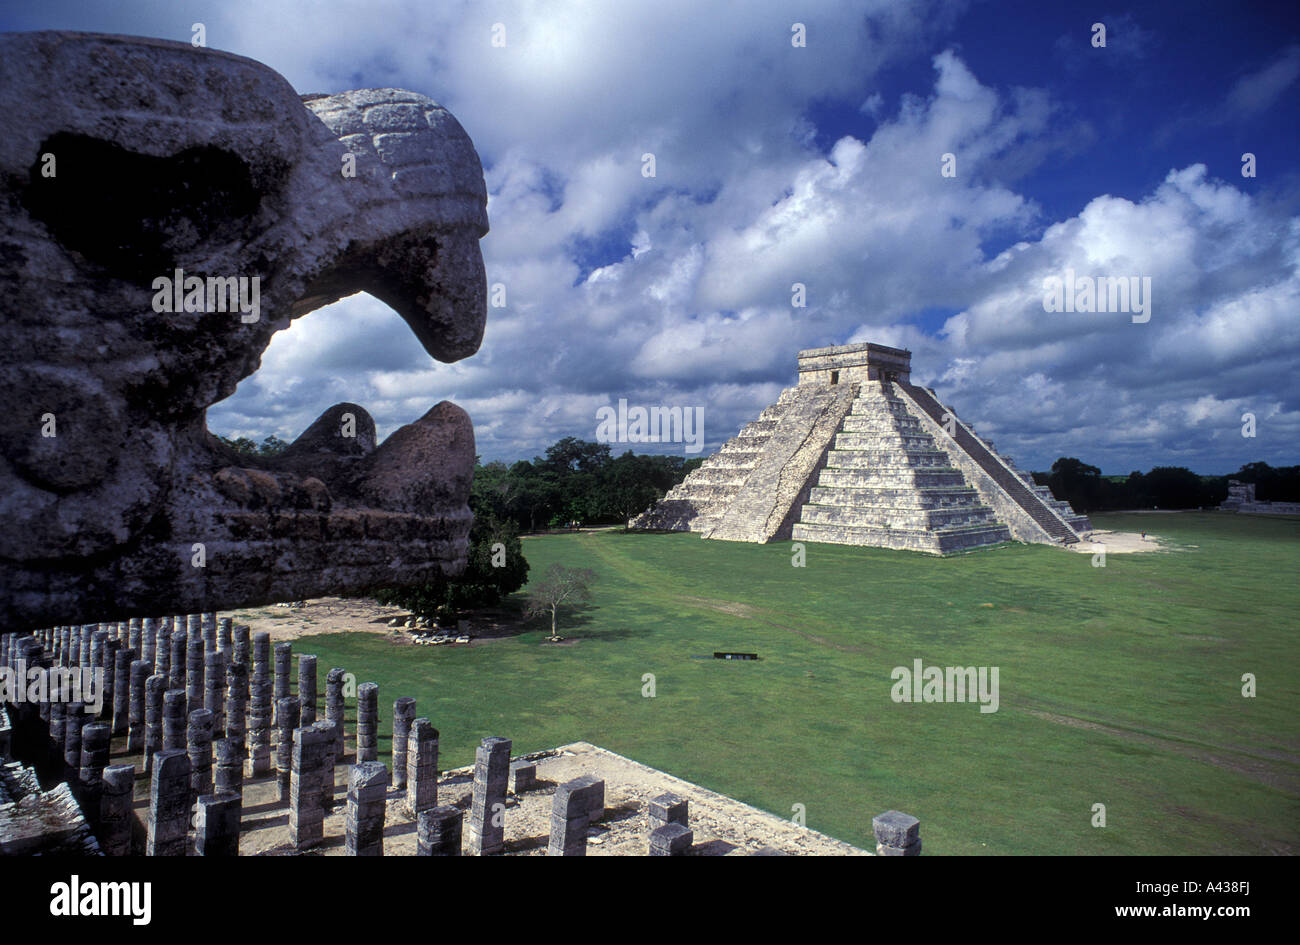 El Castillo Pyramide de Kukulcán Chichen Itza, Yucatan, Mexique. Banque D'Images